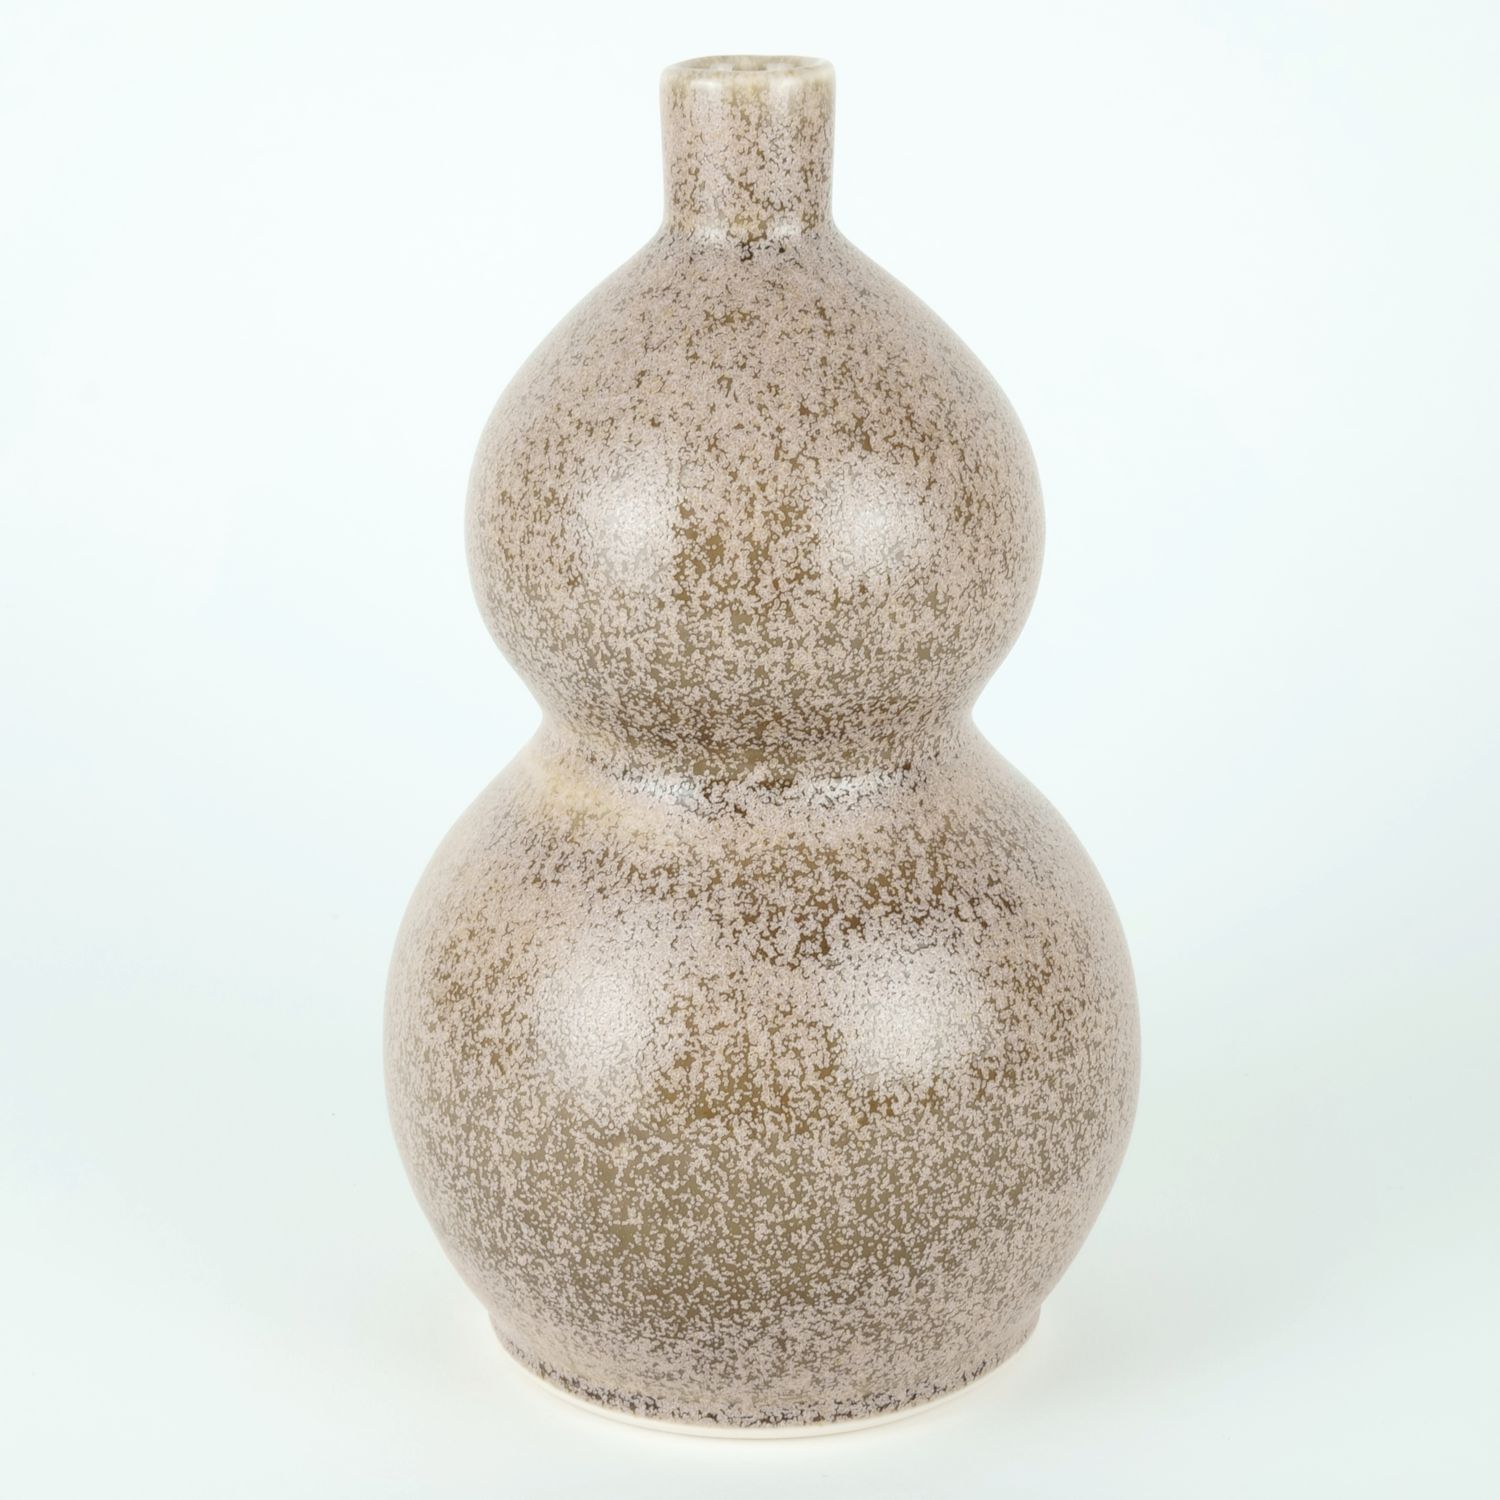 William Lee: Gourd Vase in Brown Product Image 1 of 1